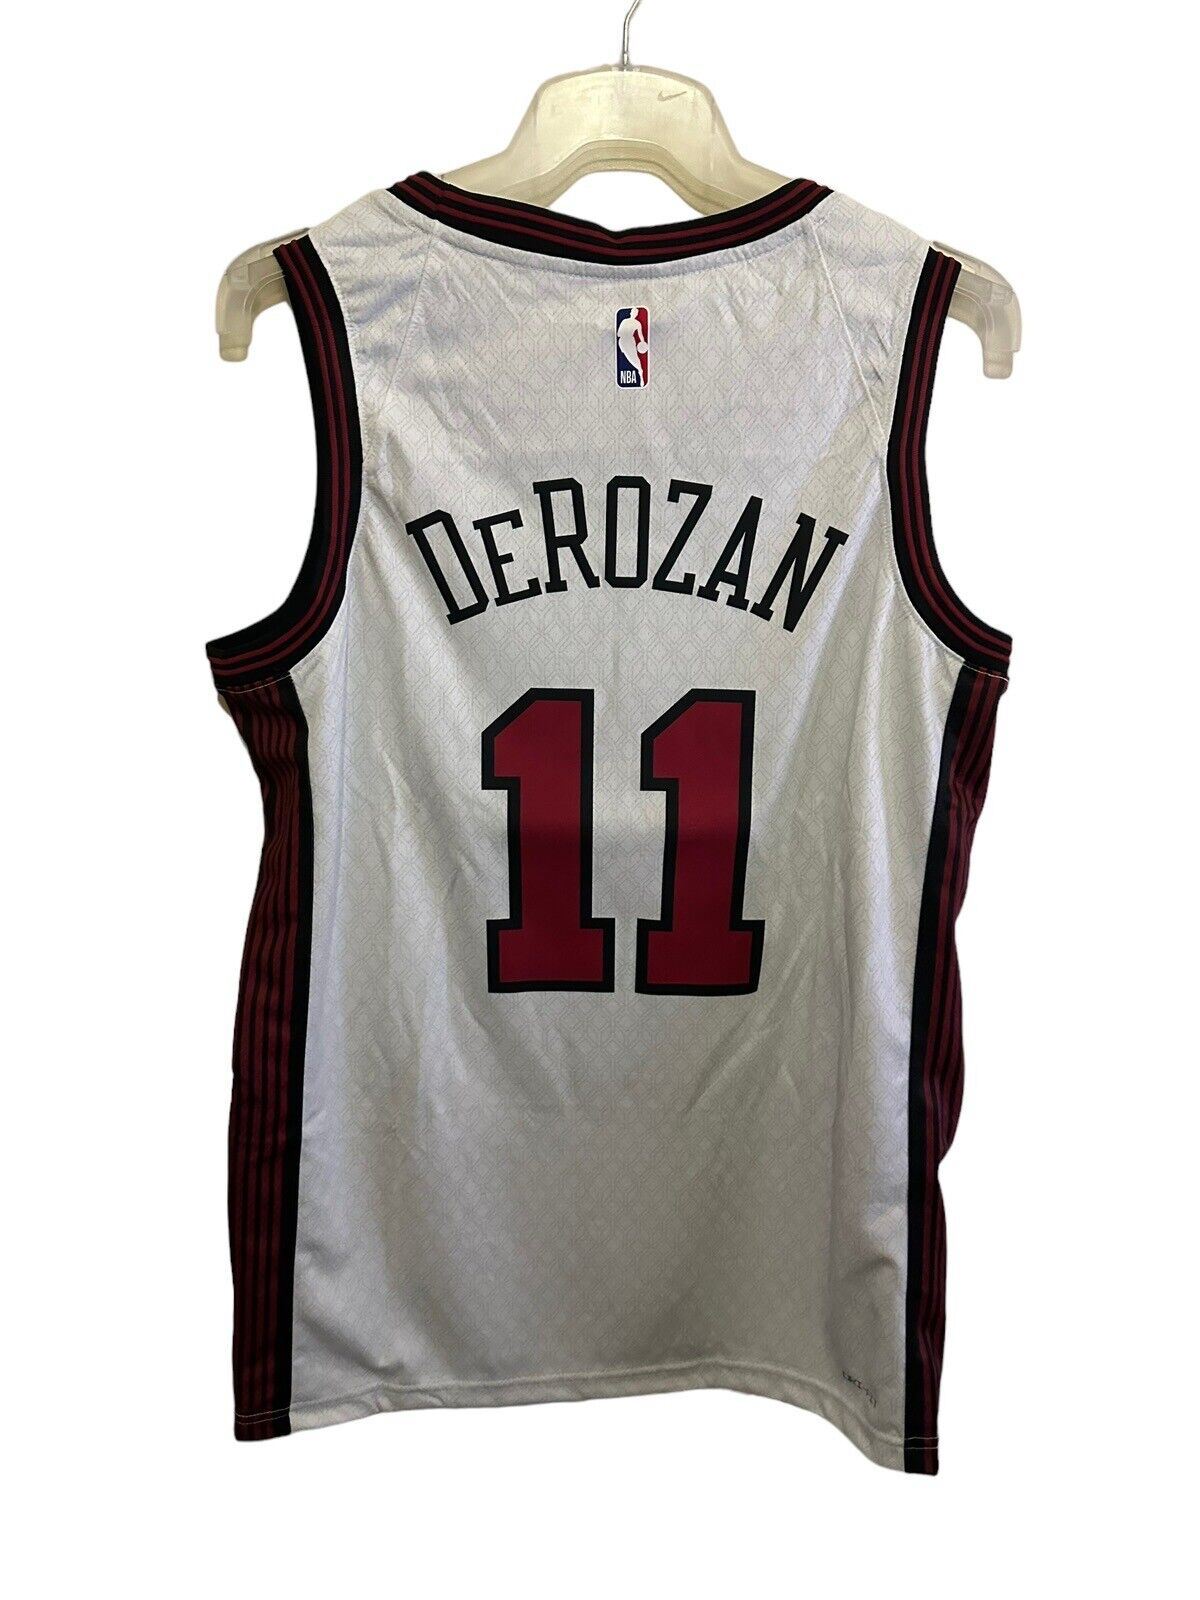 Nike NBA Chicago Bulls City Edition Jersey DEROZAN Mens Large